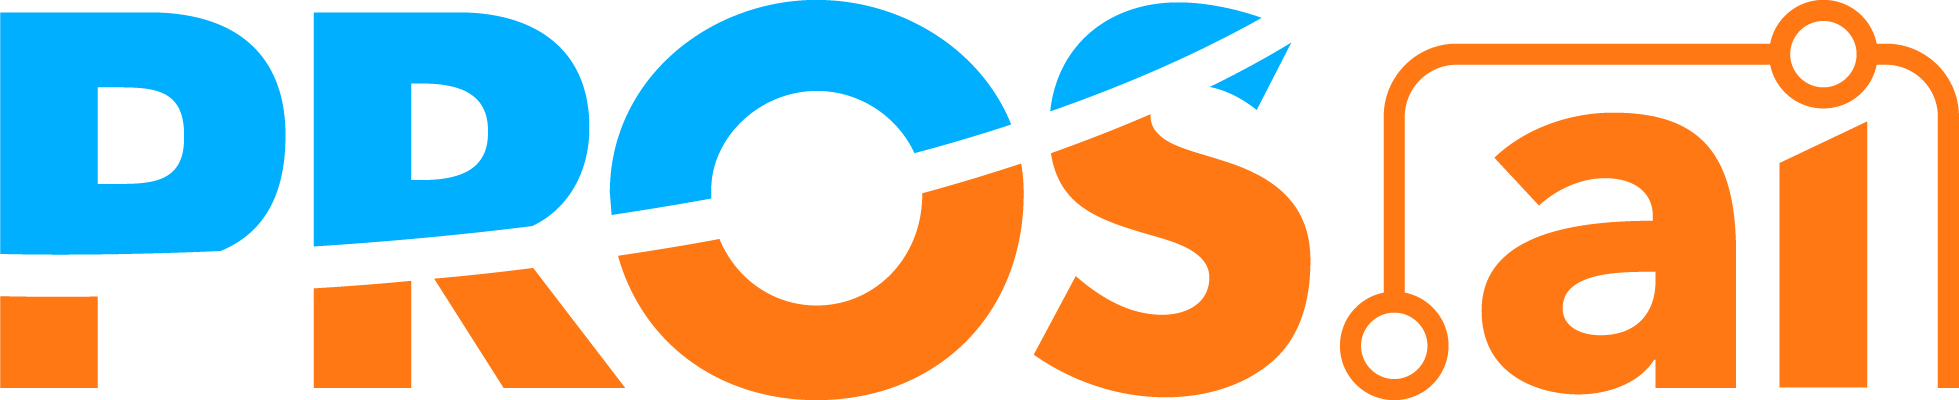 PROS.AI_Logo.jpg